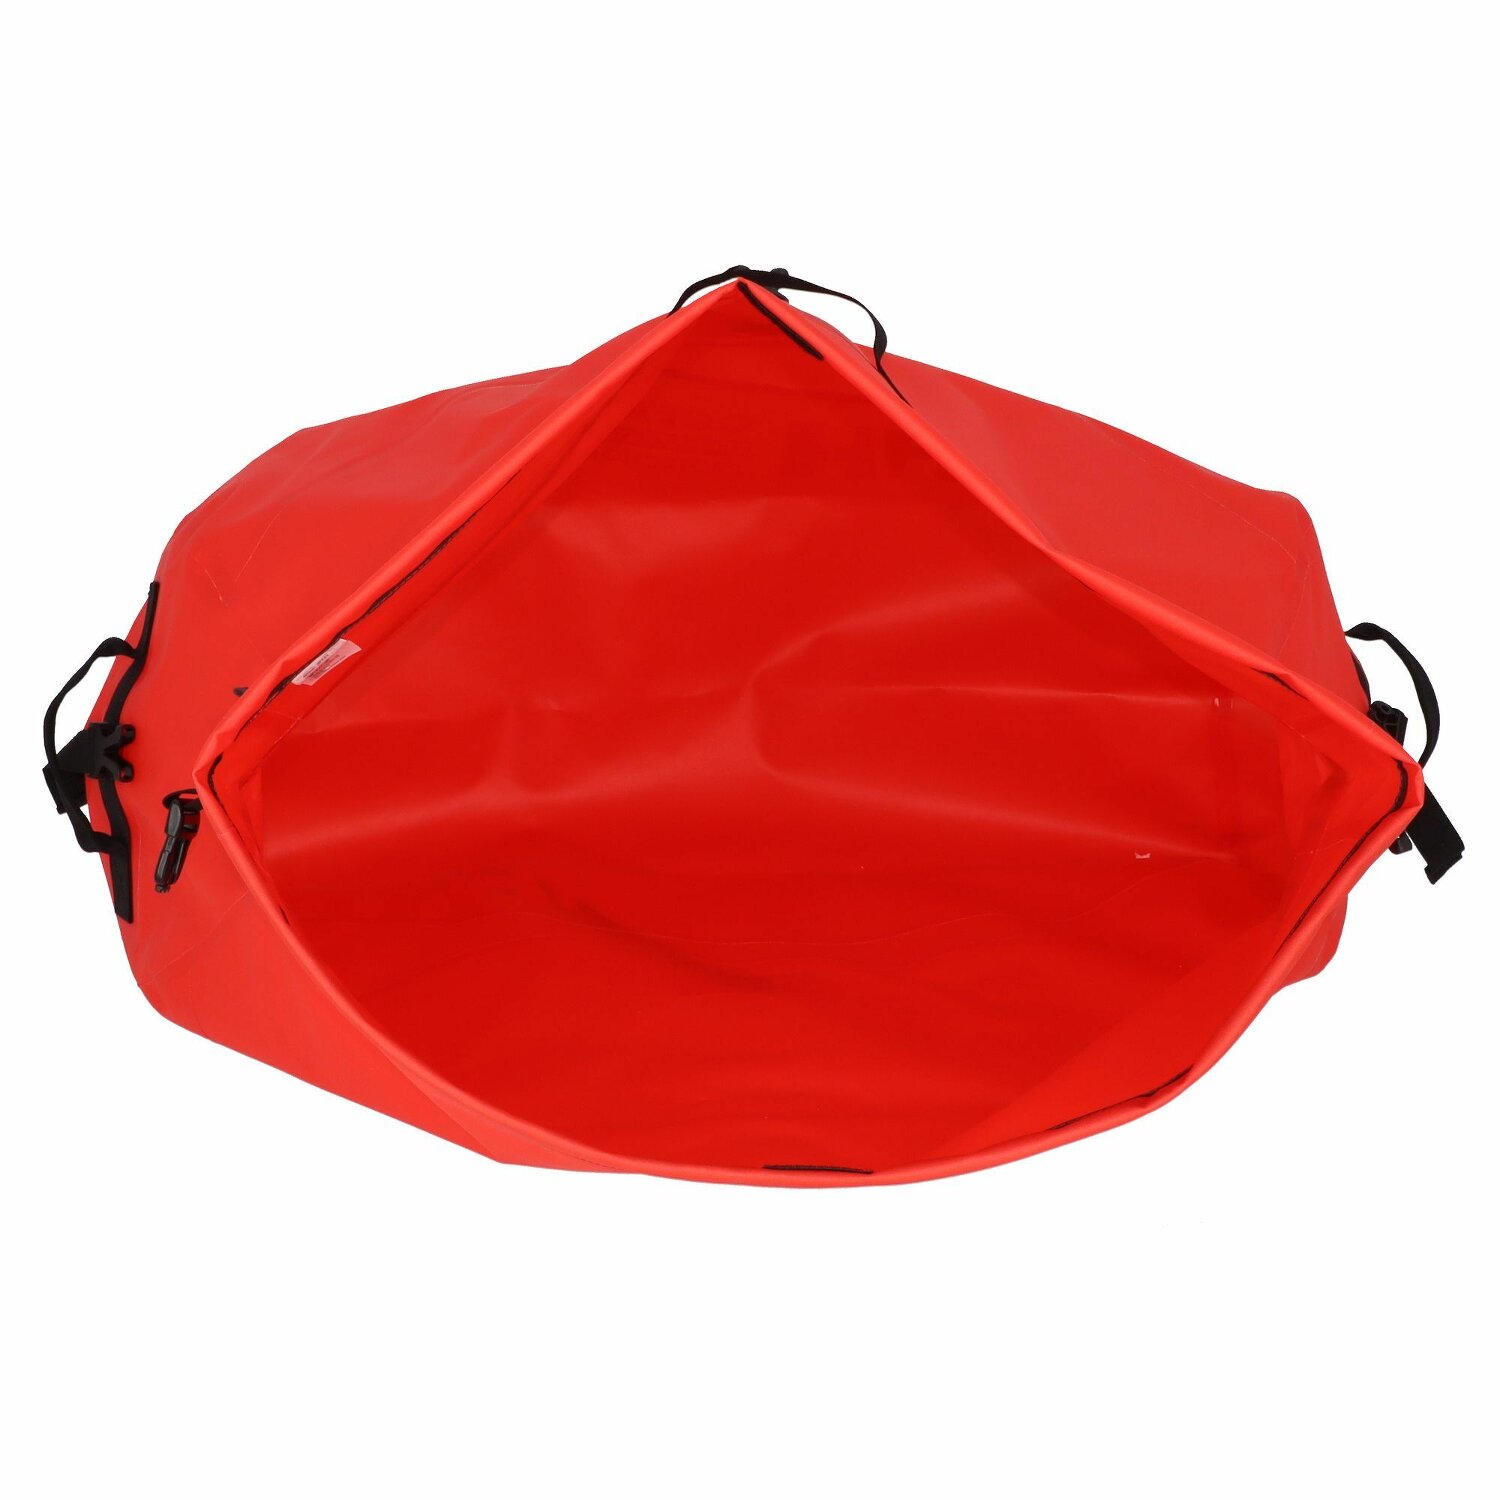 Helly Hansen Offshore Waterproof Duffel Bag 50L Alert Red